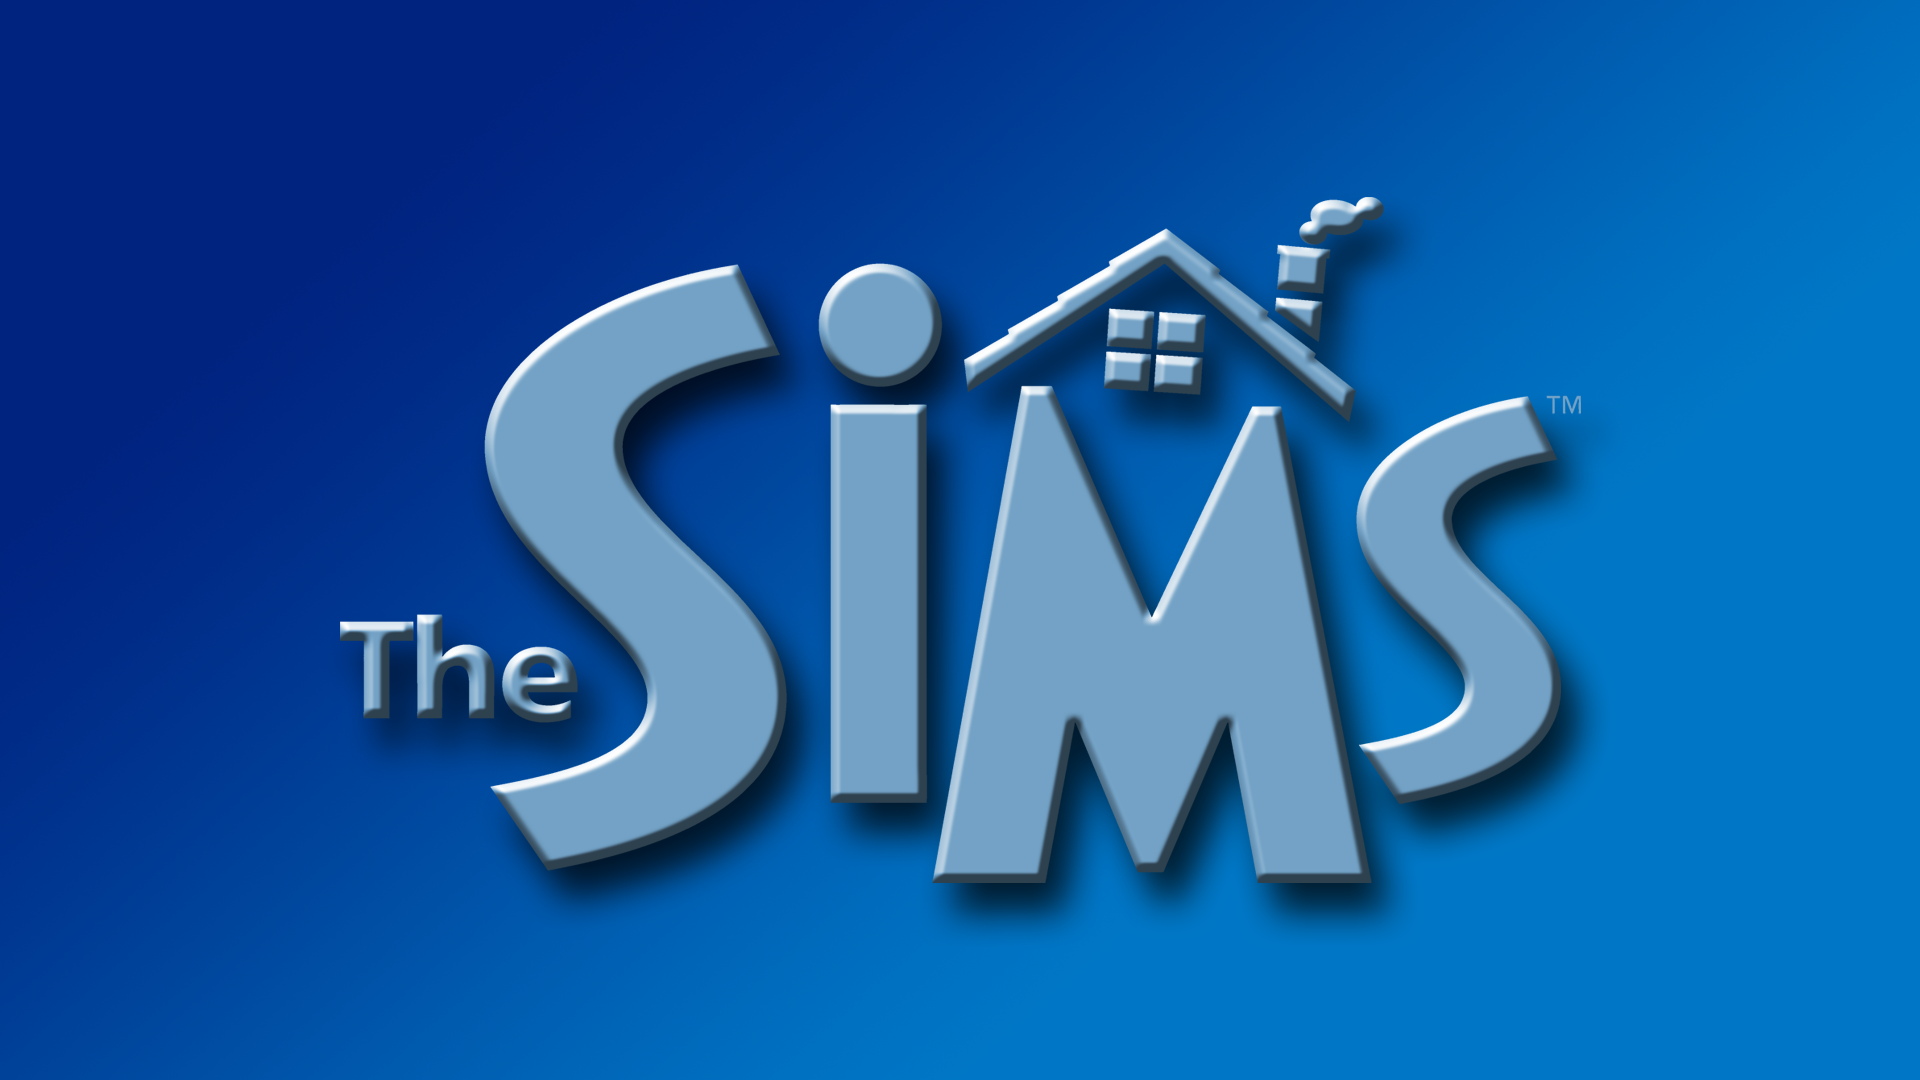 The Sims Similar Games - Giant Bomb